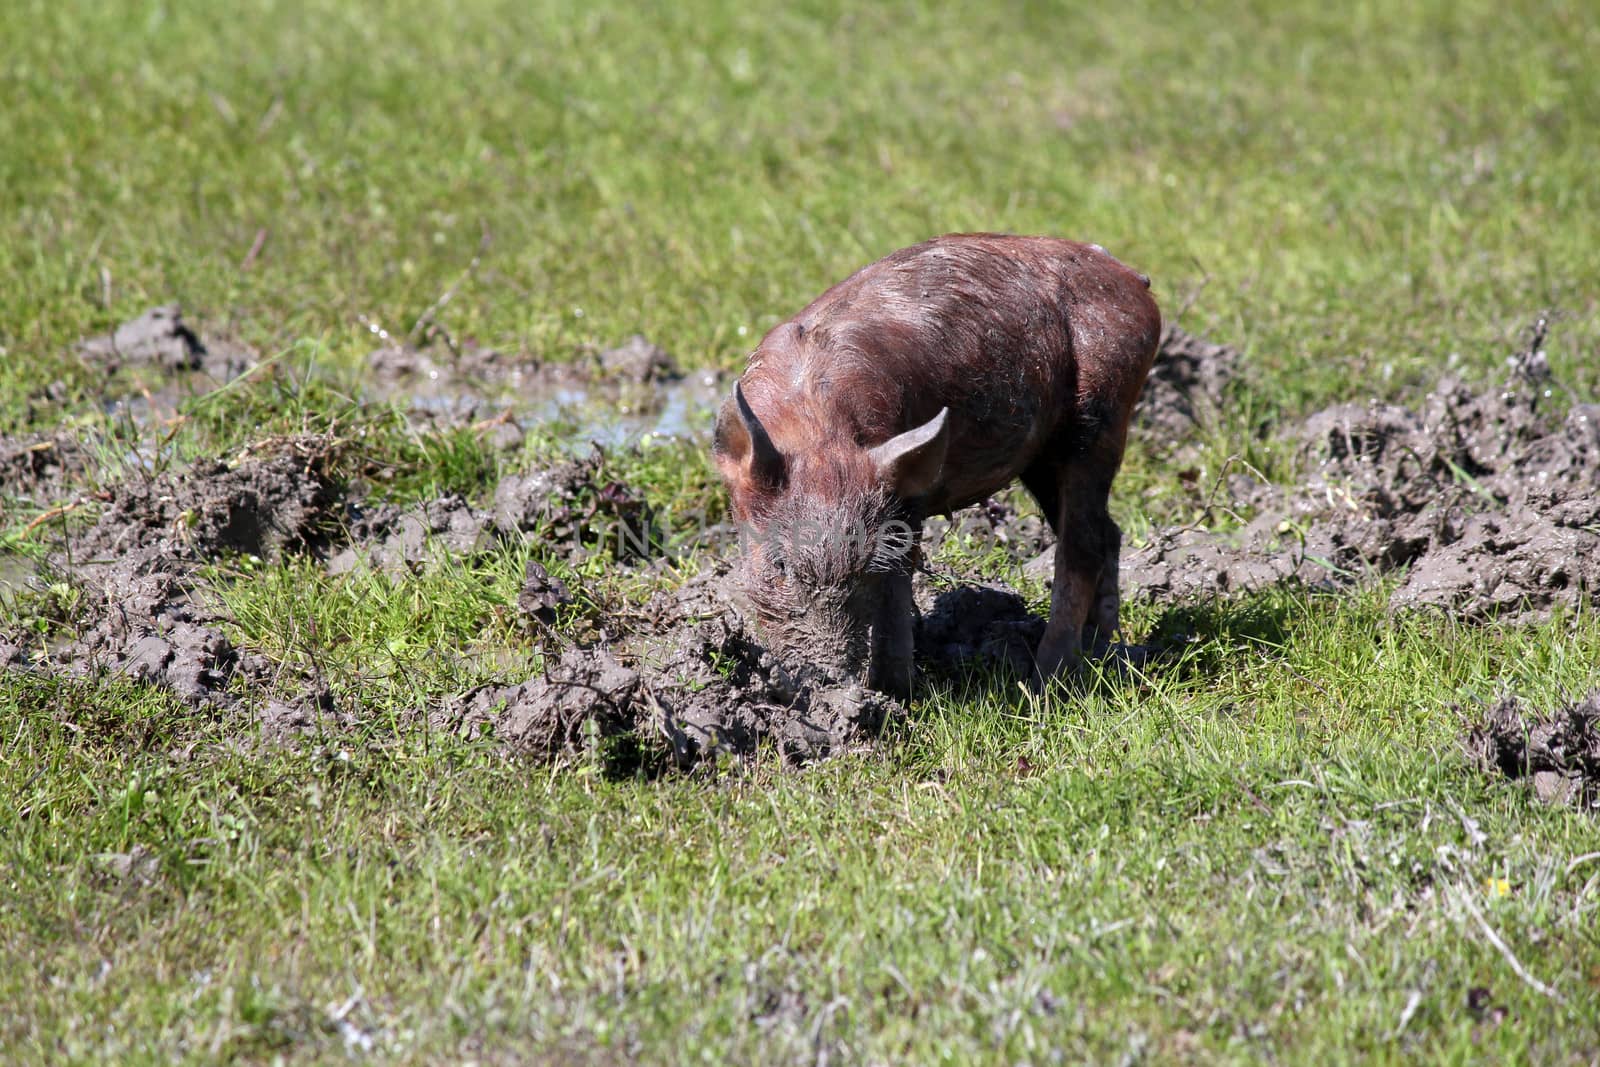 little pig in a mud farm scene